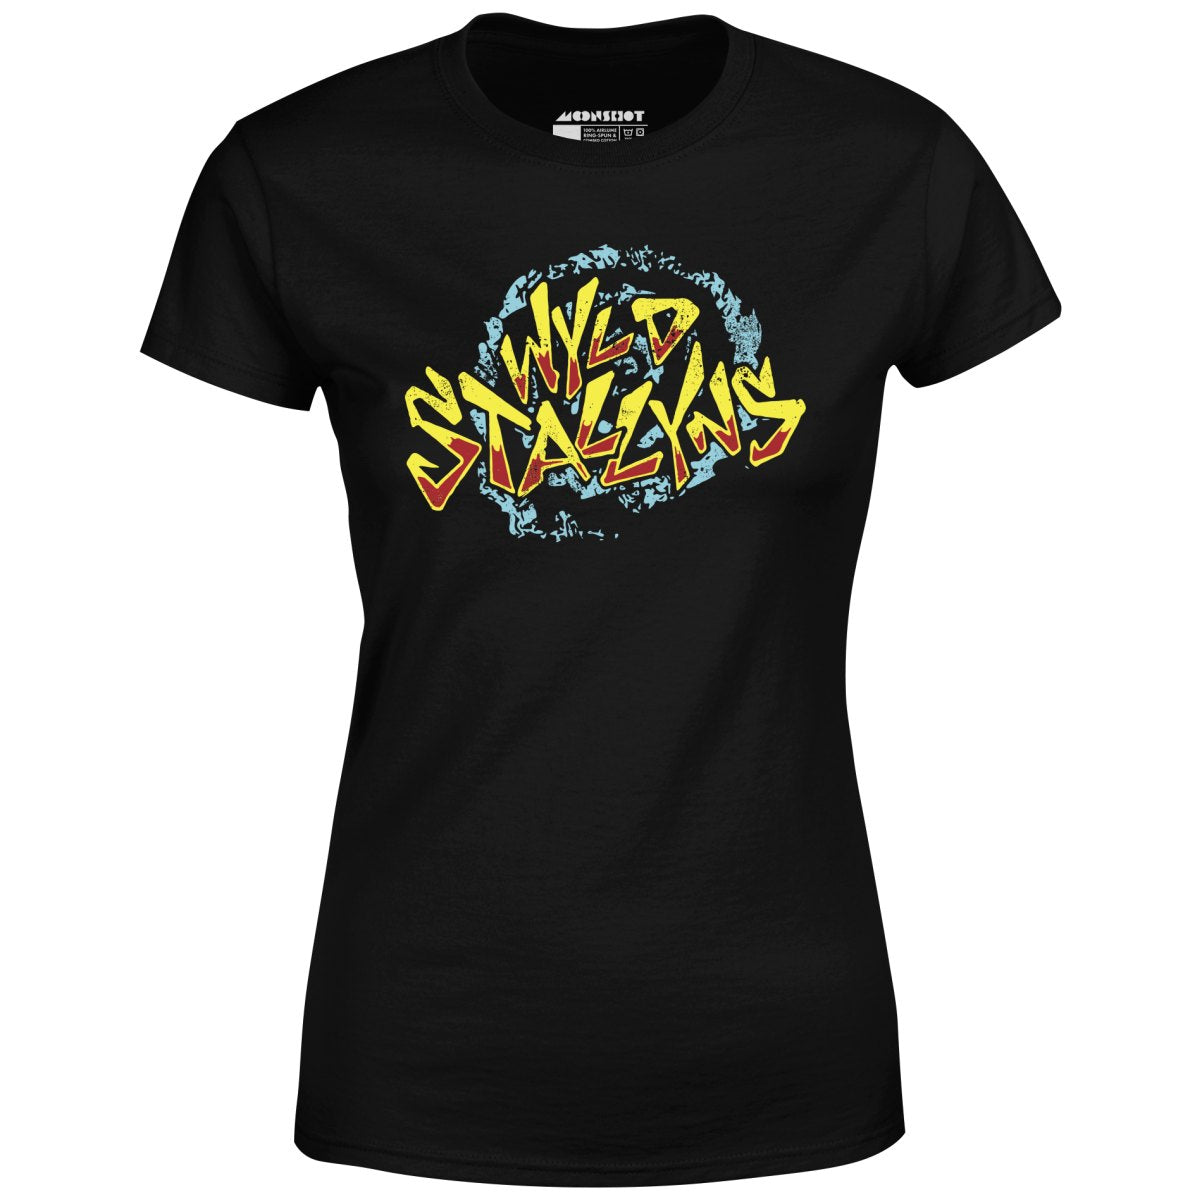 Wyld Stallyns - Women's T-Shirt